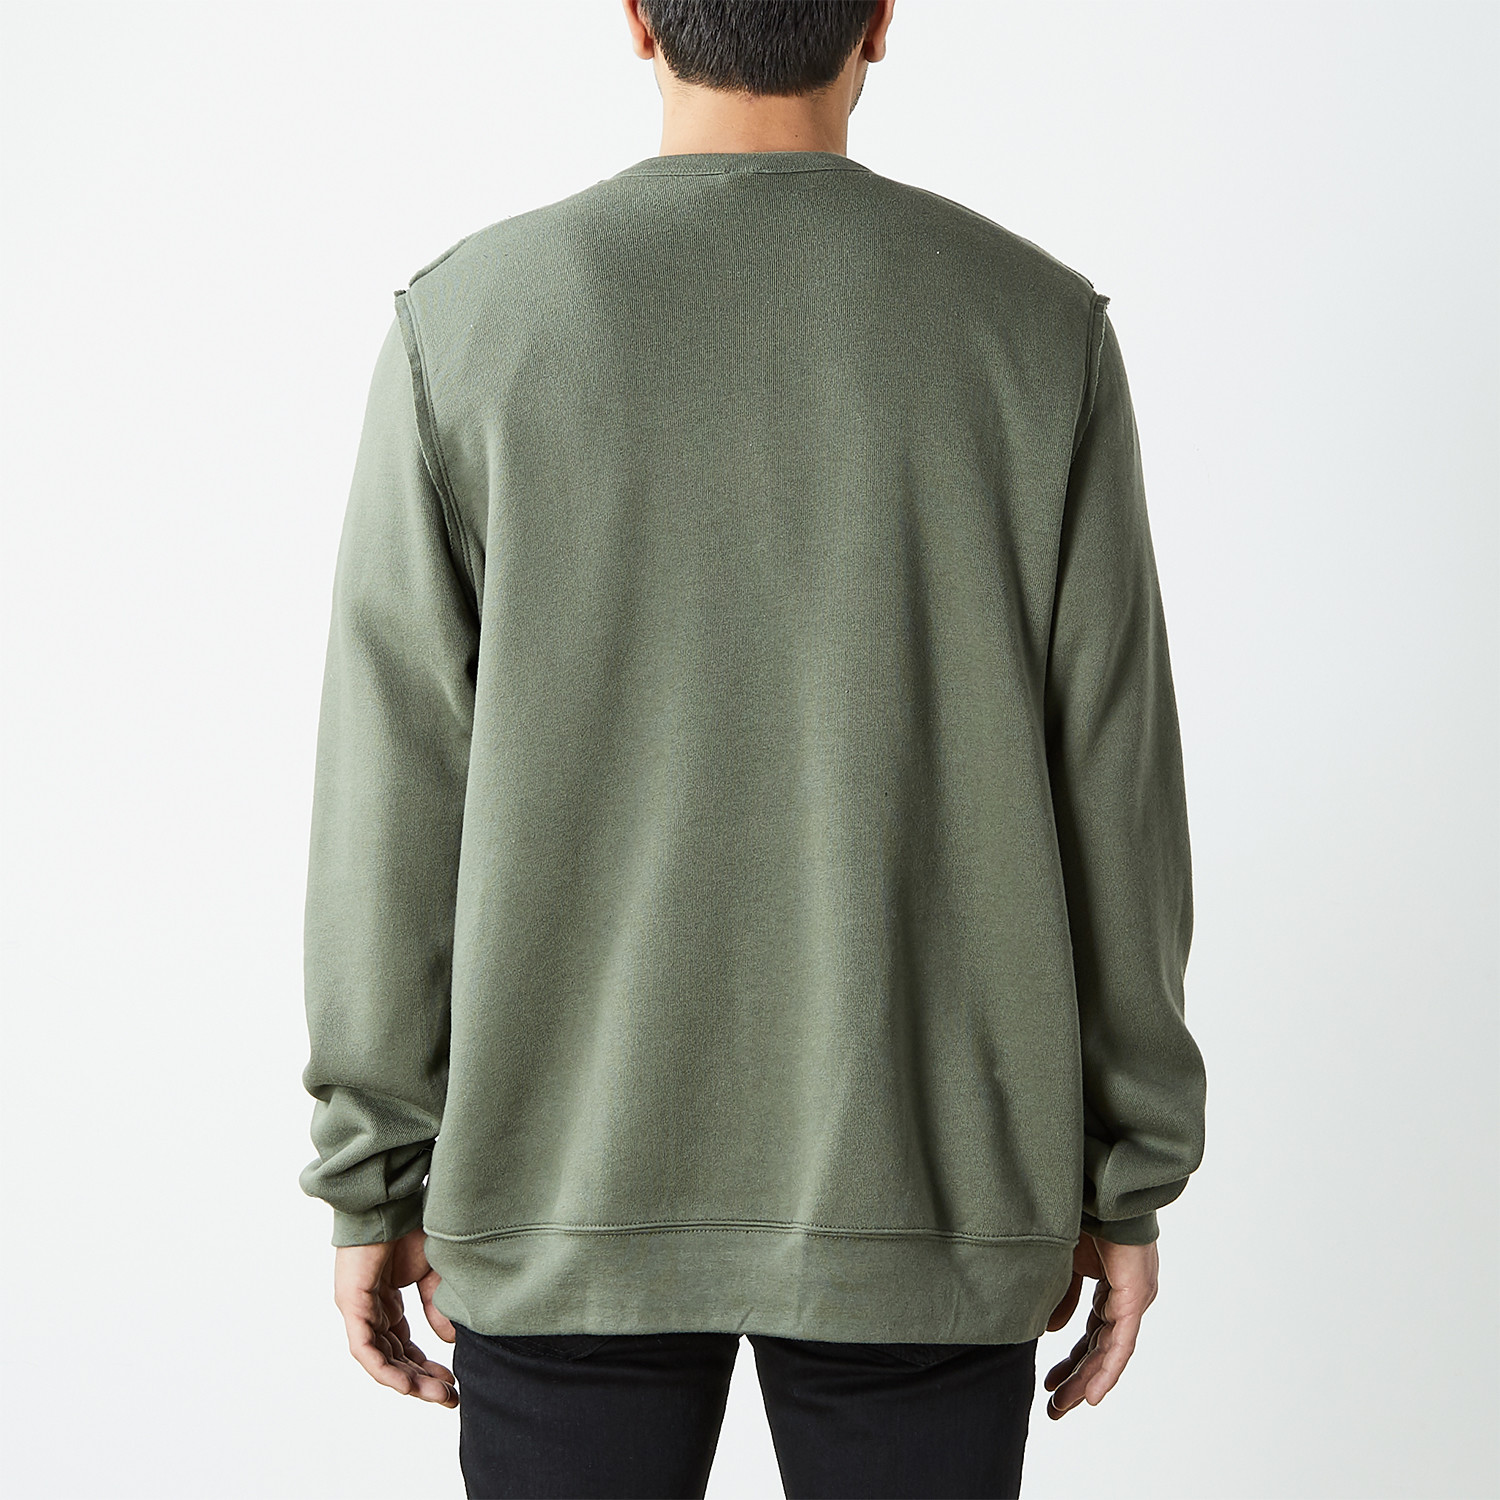 Inside Out Fleece Pullover Sweatshirt // Olive Drab (XL) - Seize ...